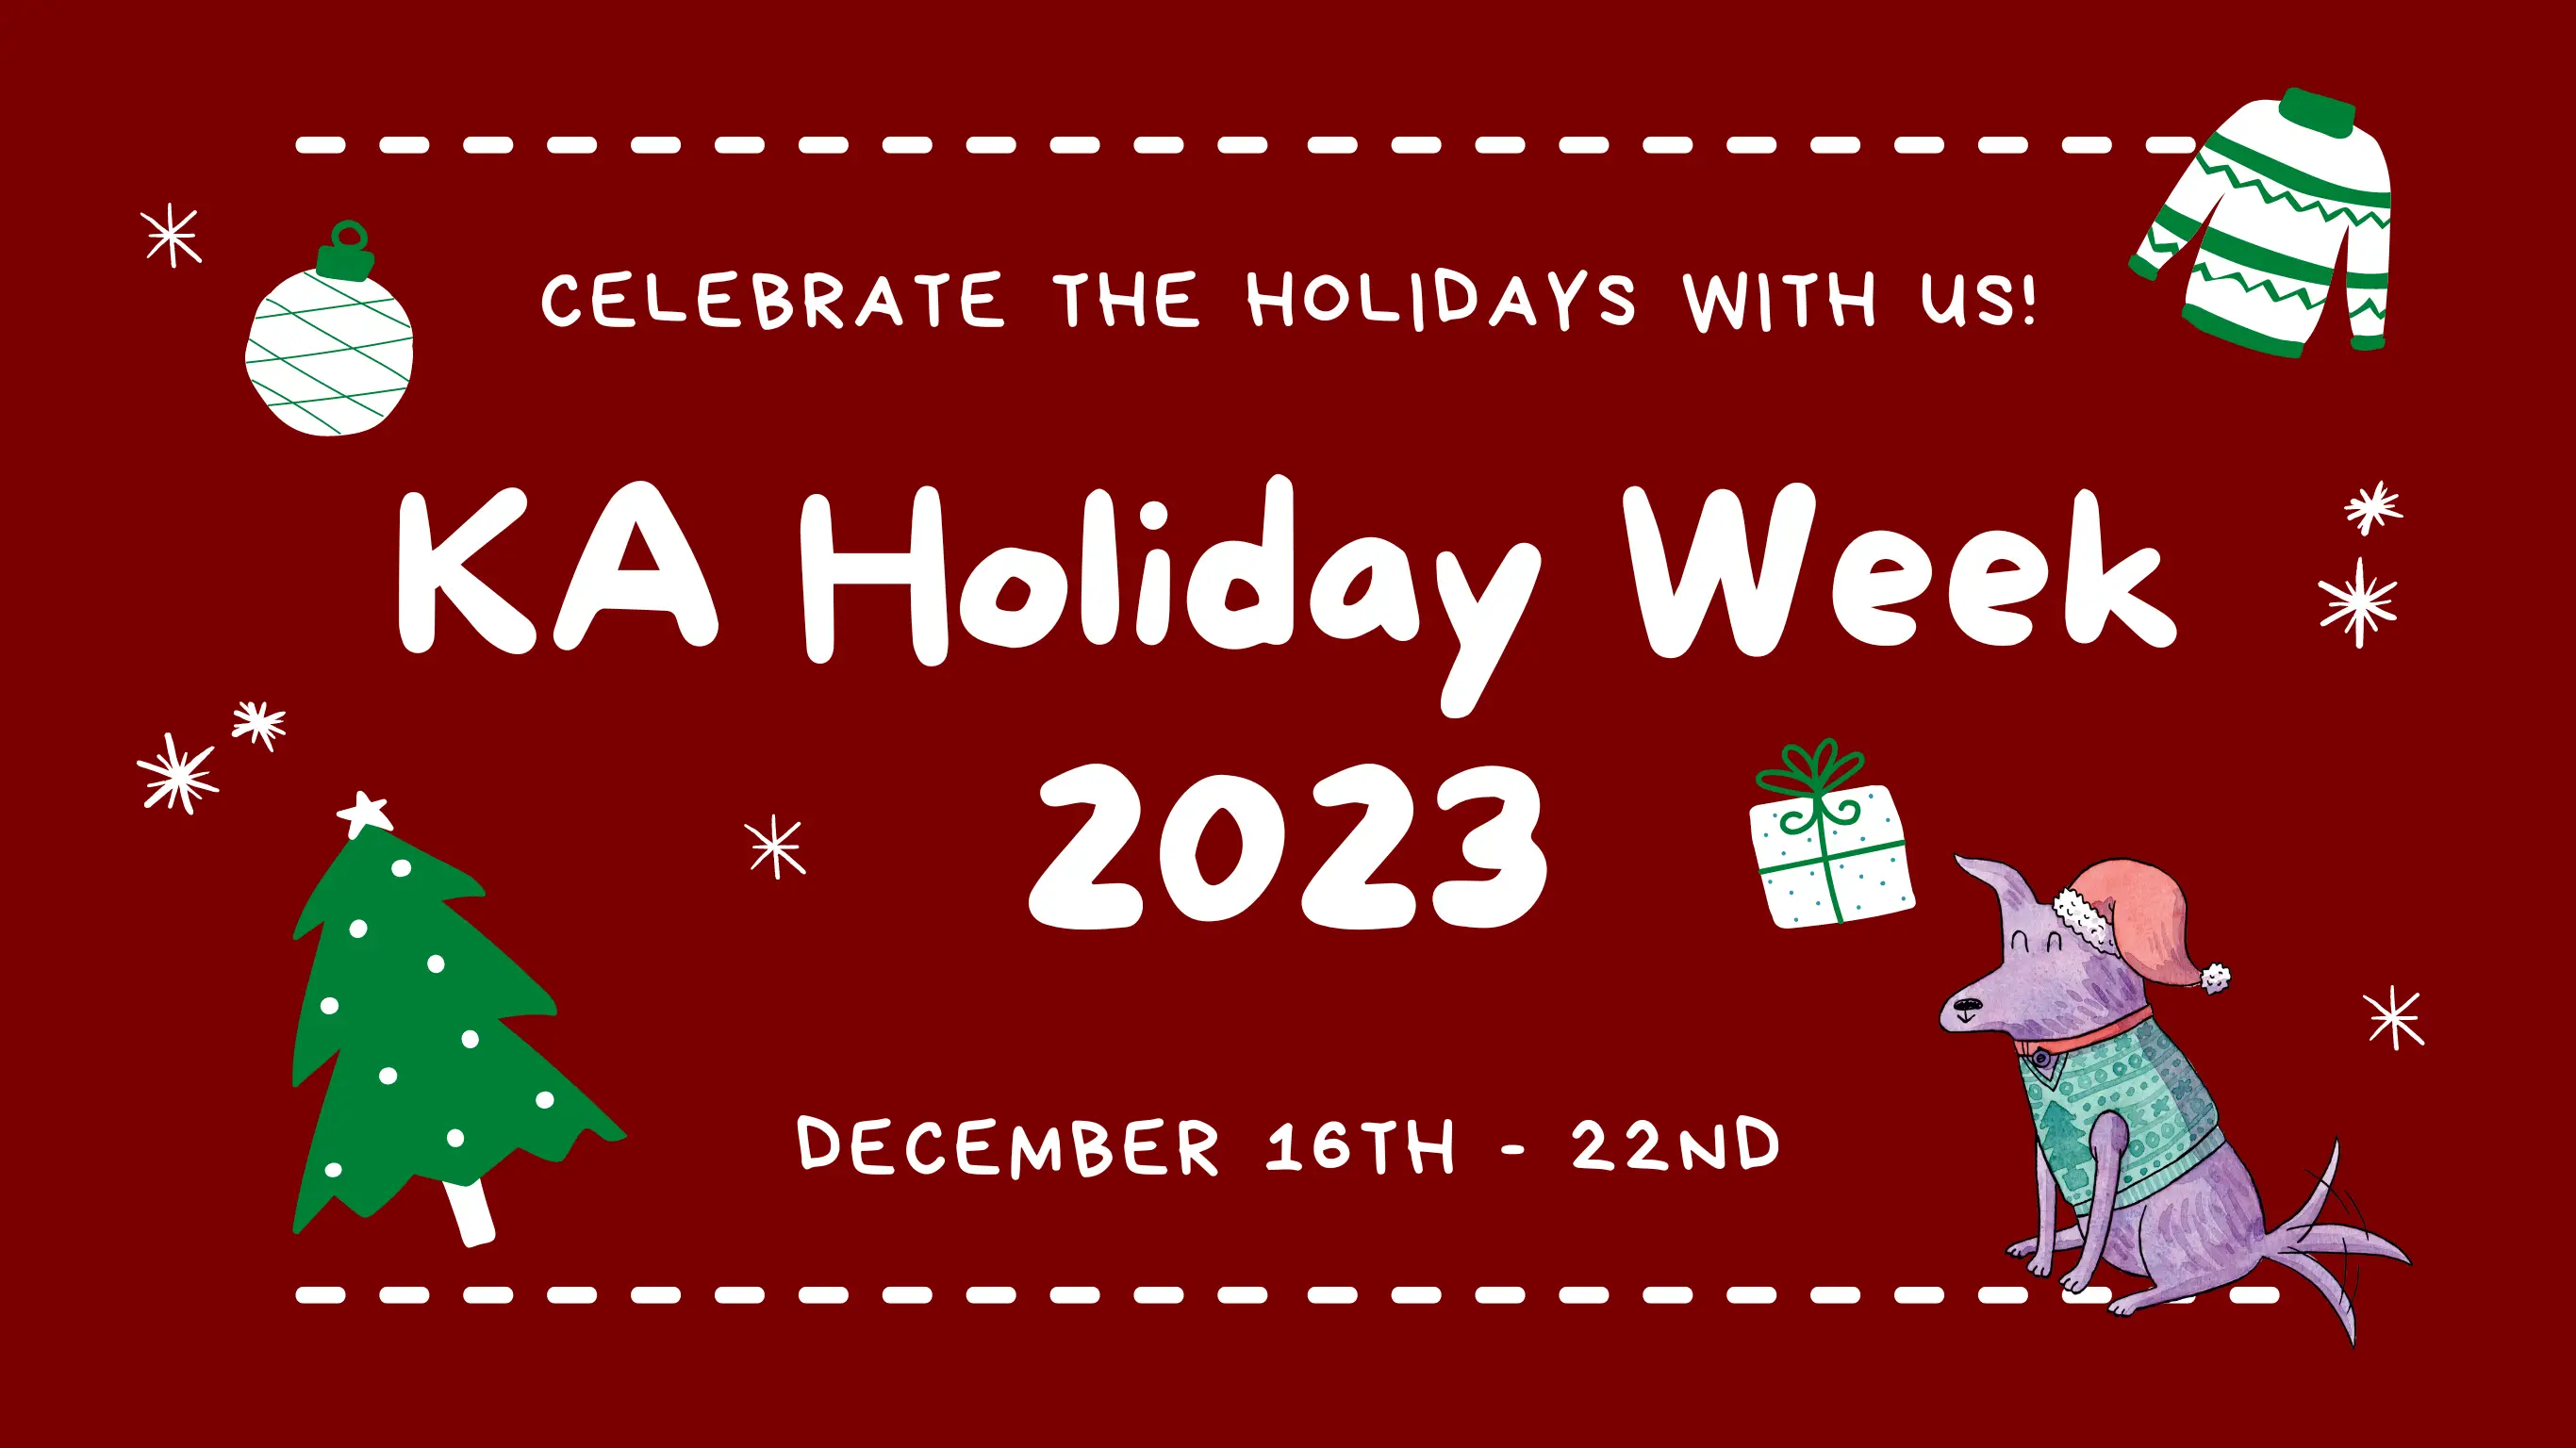 KA Holiday Week 2023: 12/16 (Sat) - 12/22 (Fri)